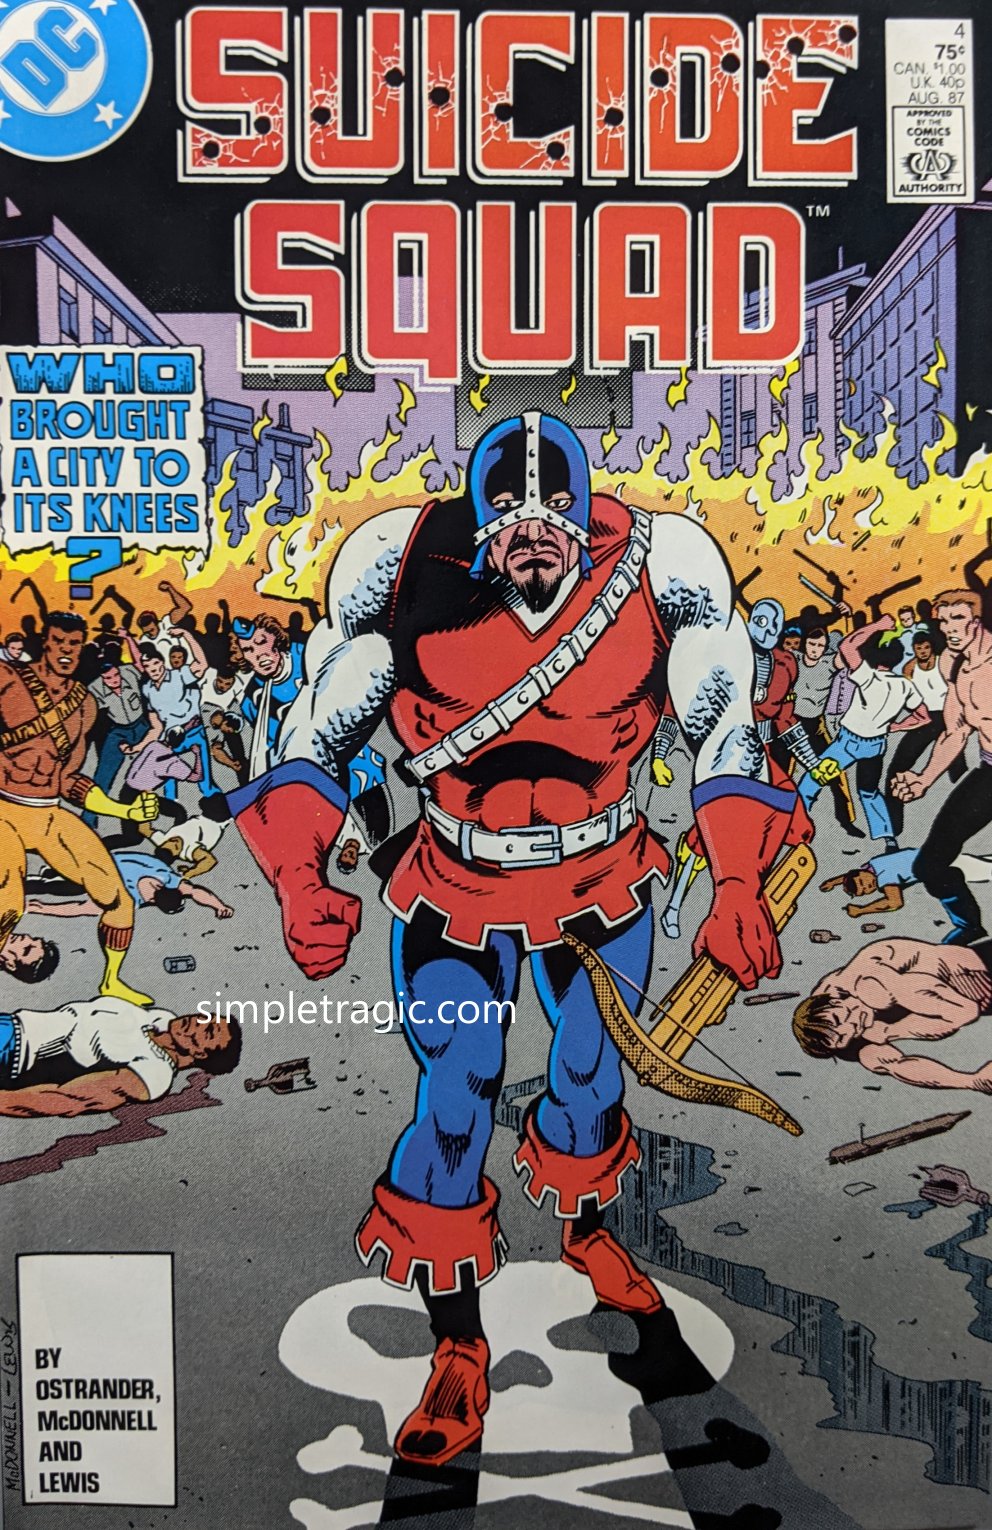 Suicide Squad #4 Comic Book Cover Art